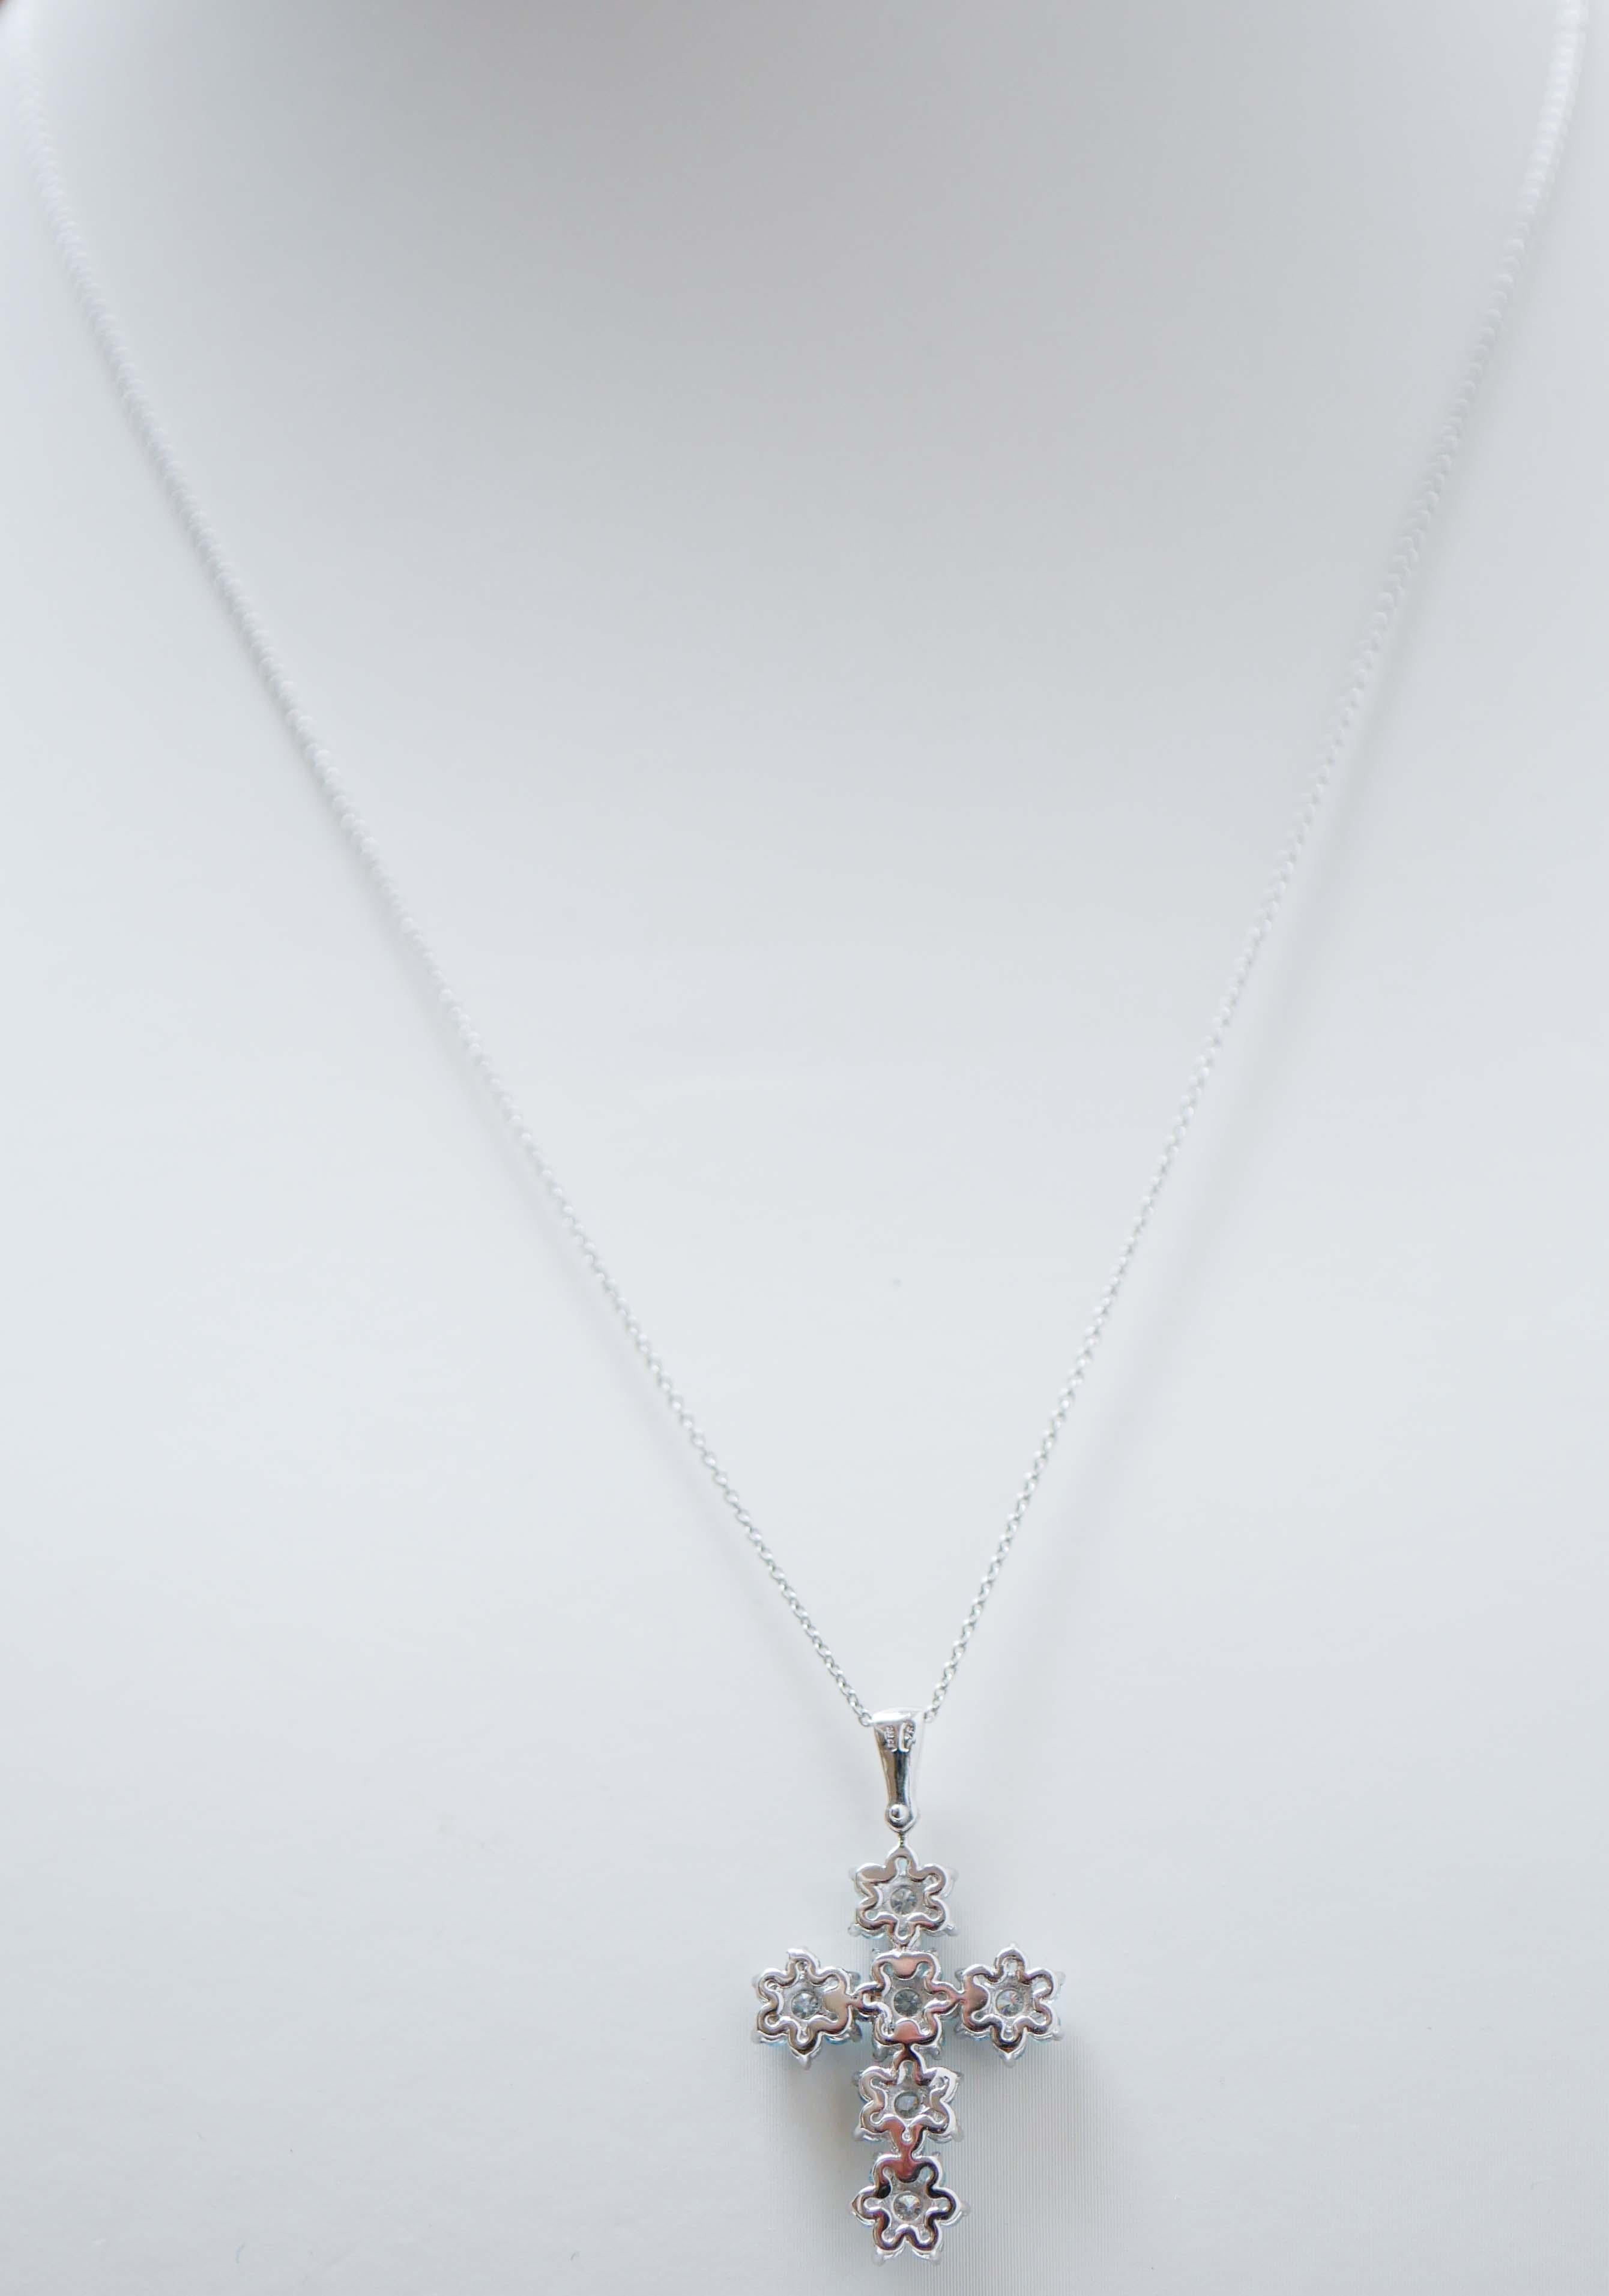 Mixed Cut Aquamarine, Diamonds, 18 Karat White Gold Pendant Necklace. For Sale